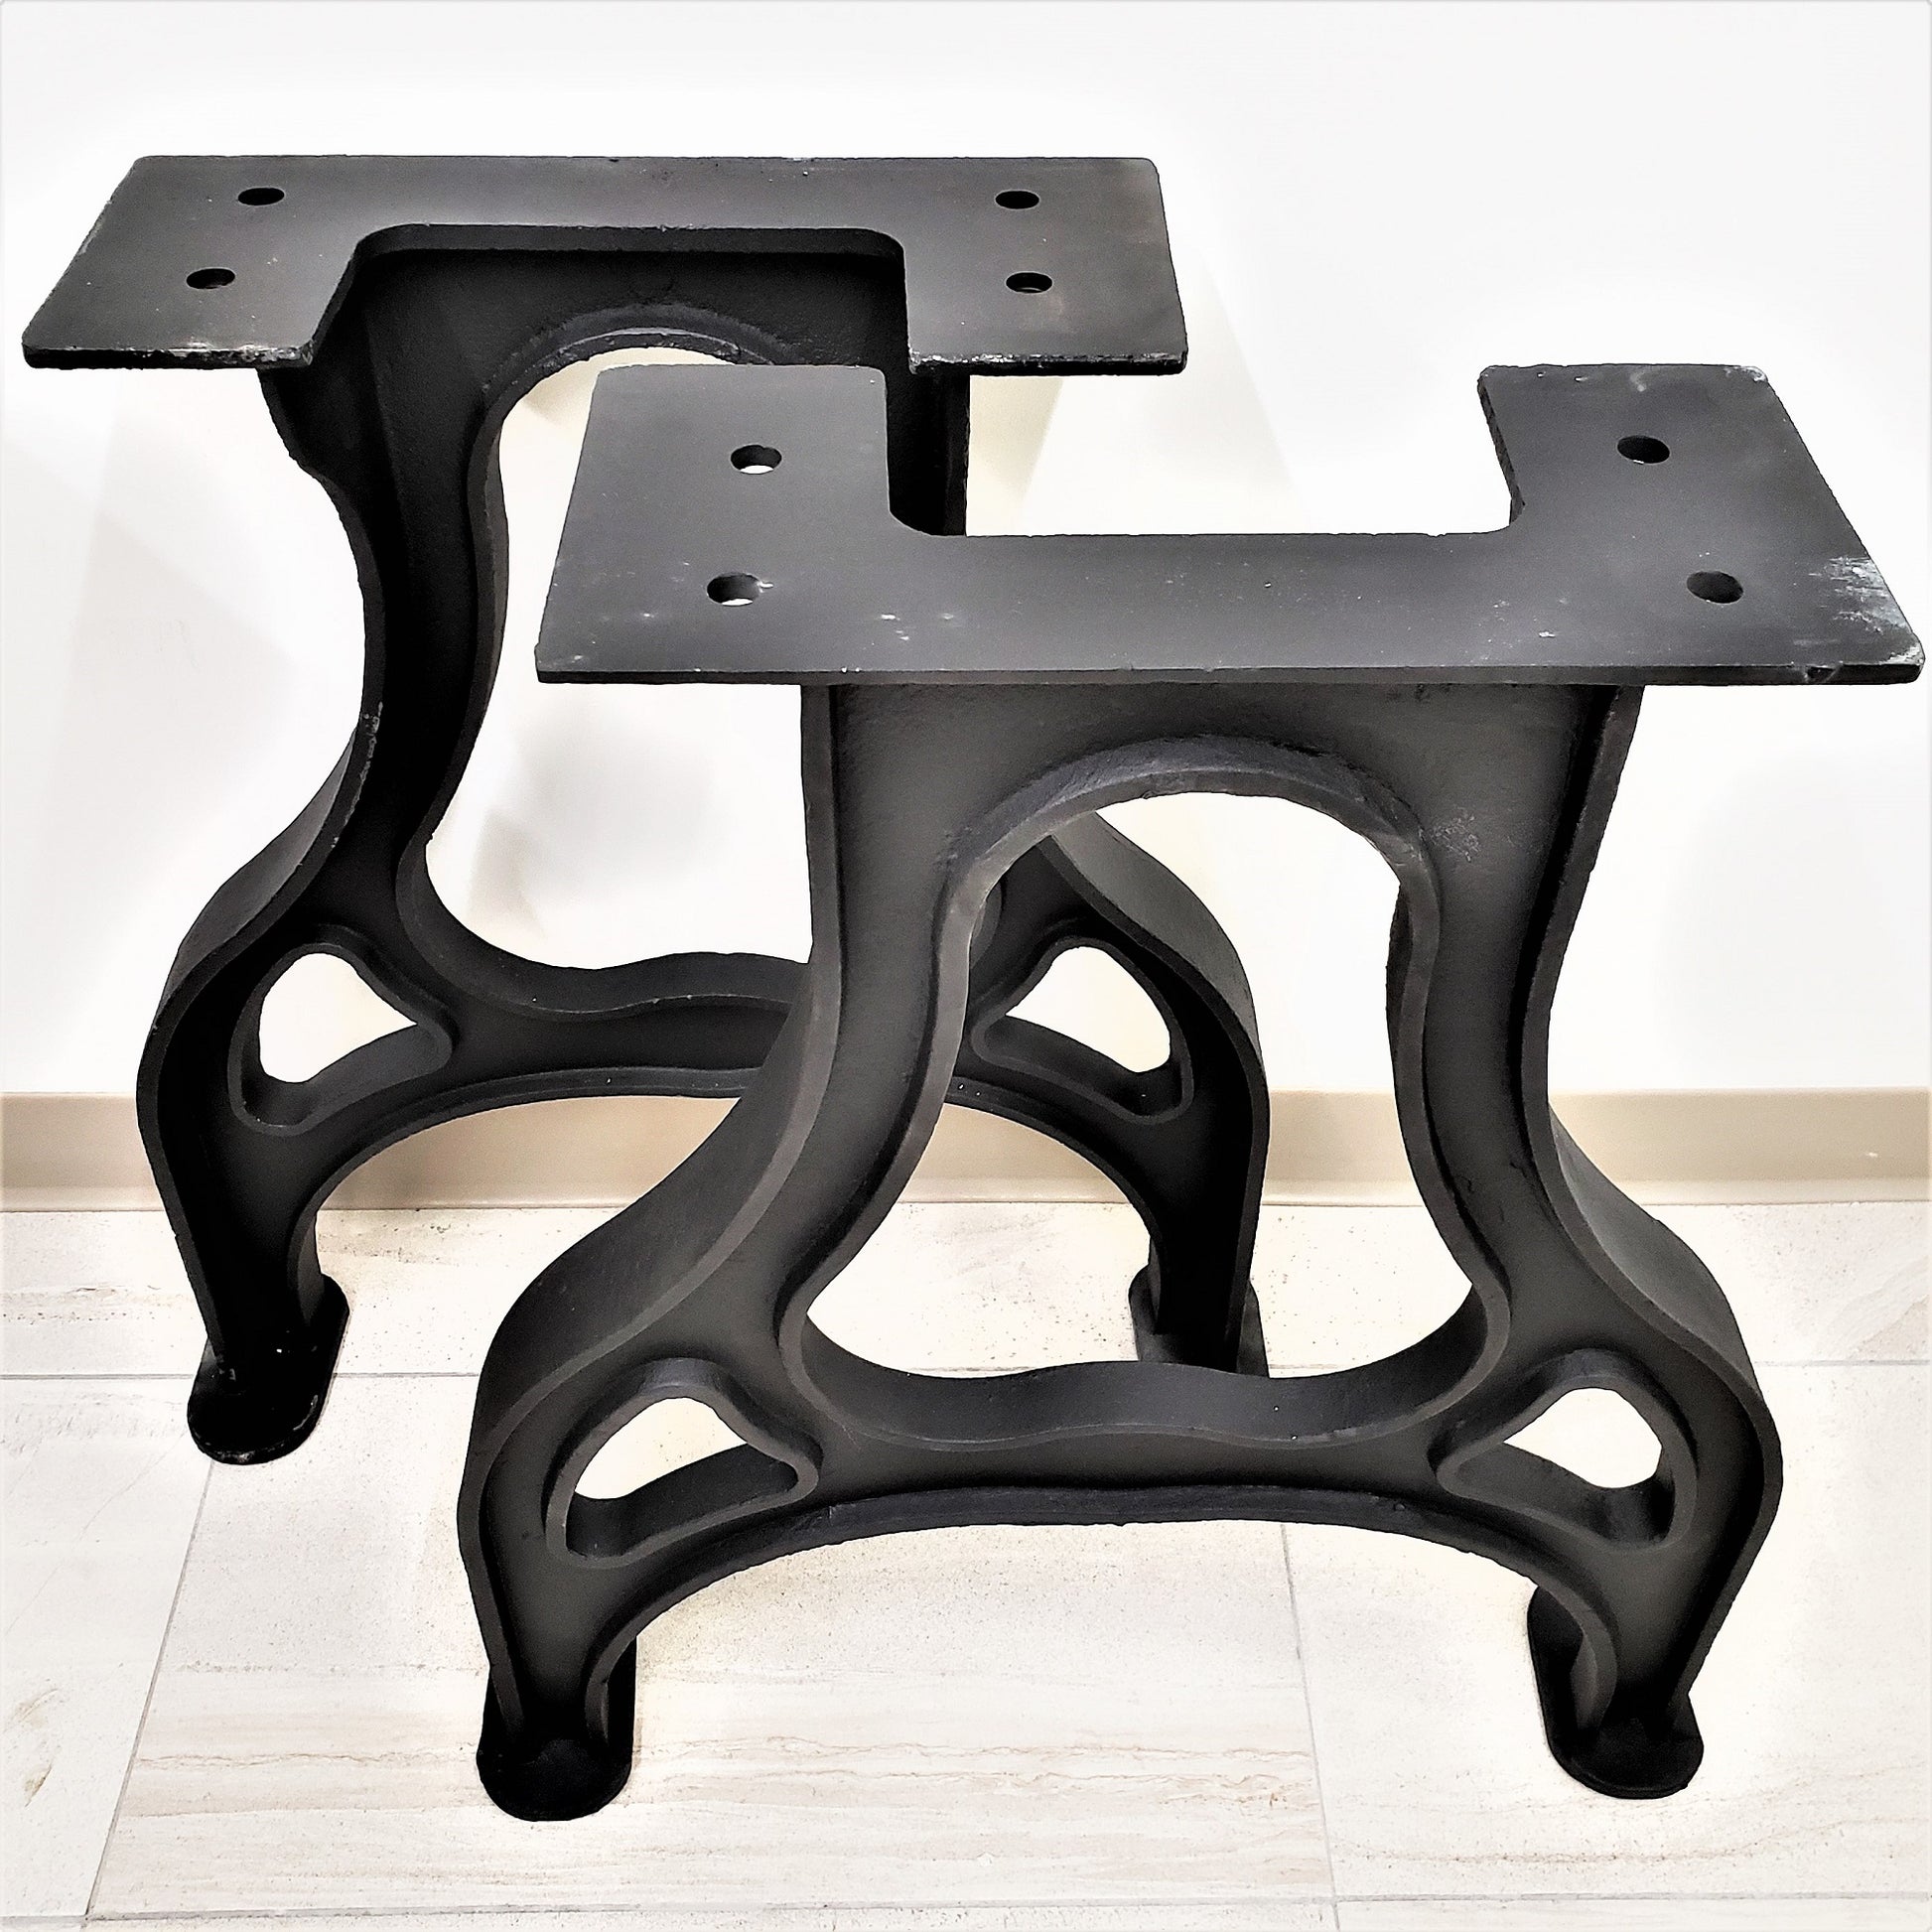 Cast Iron Table Base, Furniture Legs, Metal Legs, Steel Legs, Coffee Table Legs, Hairpin Legs, Dining Table Legs